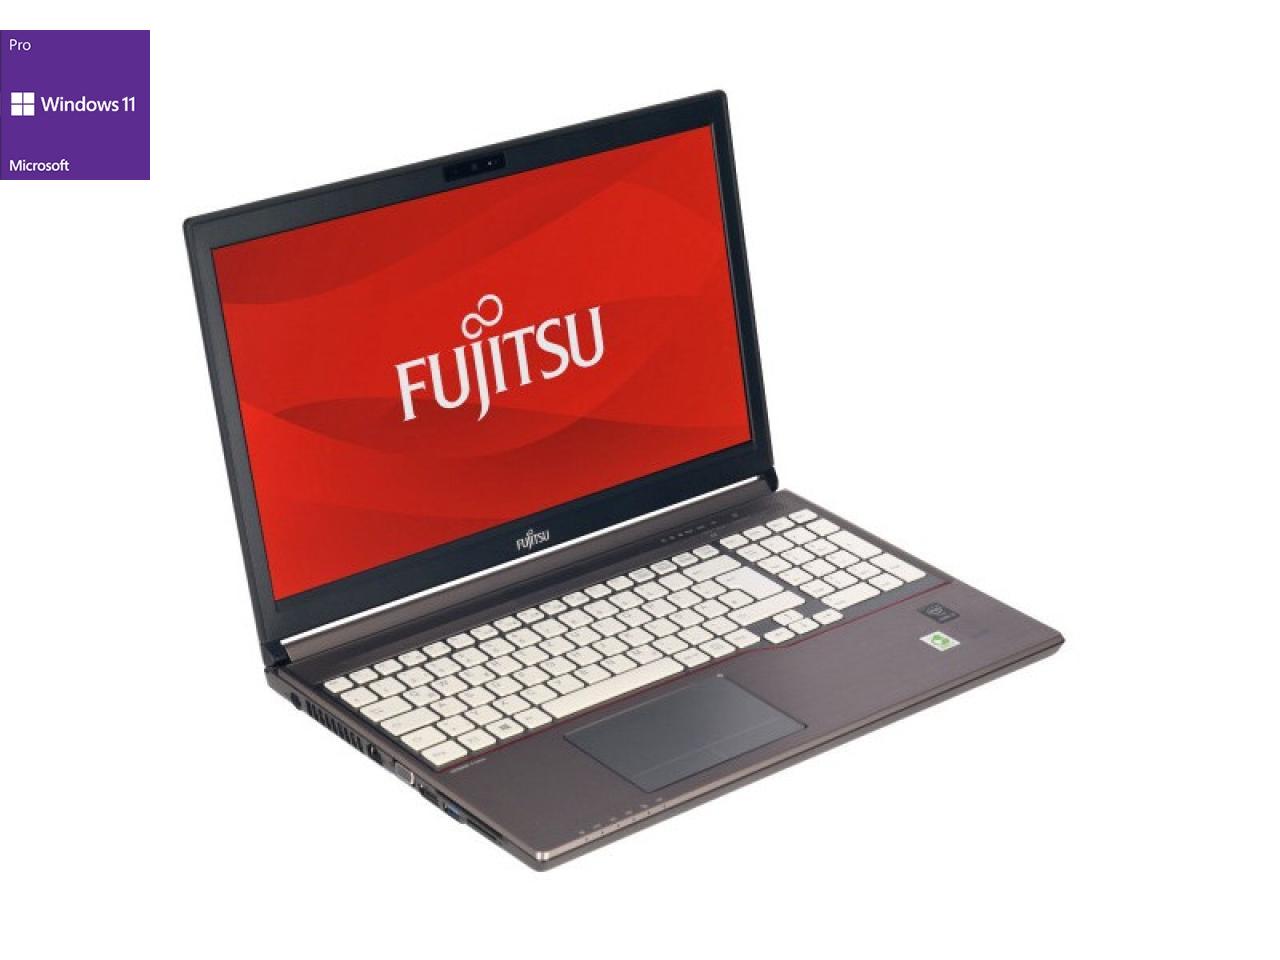 Fujitsu LifeBook E559 (weißeTastatur mit Nummernblock)  - shop.bb-net.de